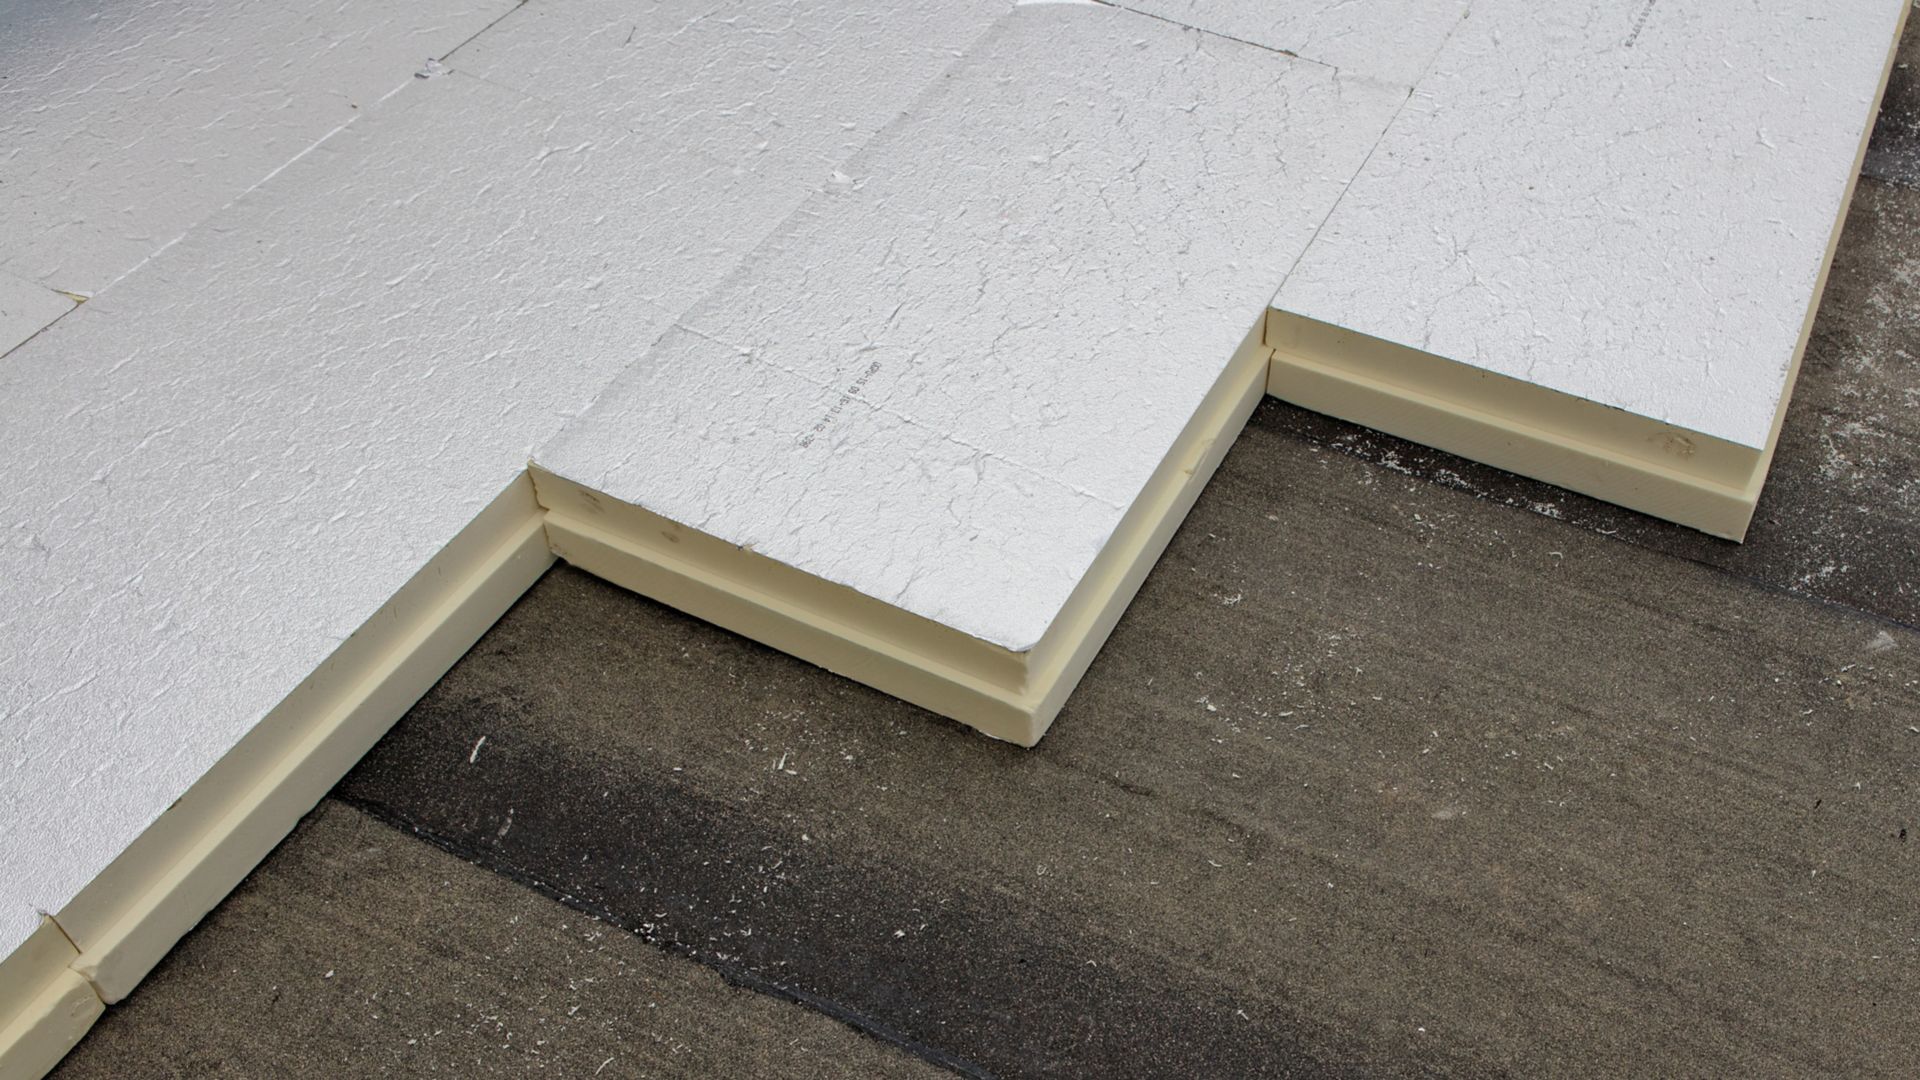 Styrodur Flat Roof Thermal Insulation